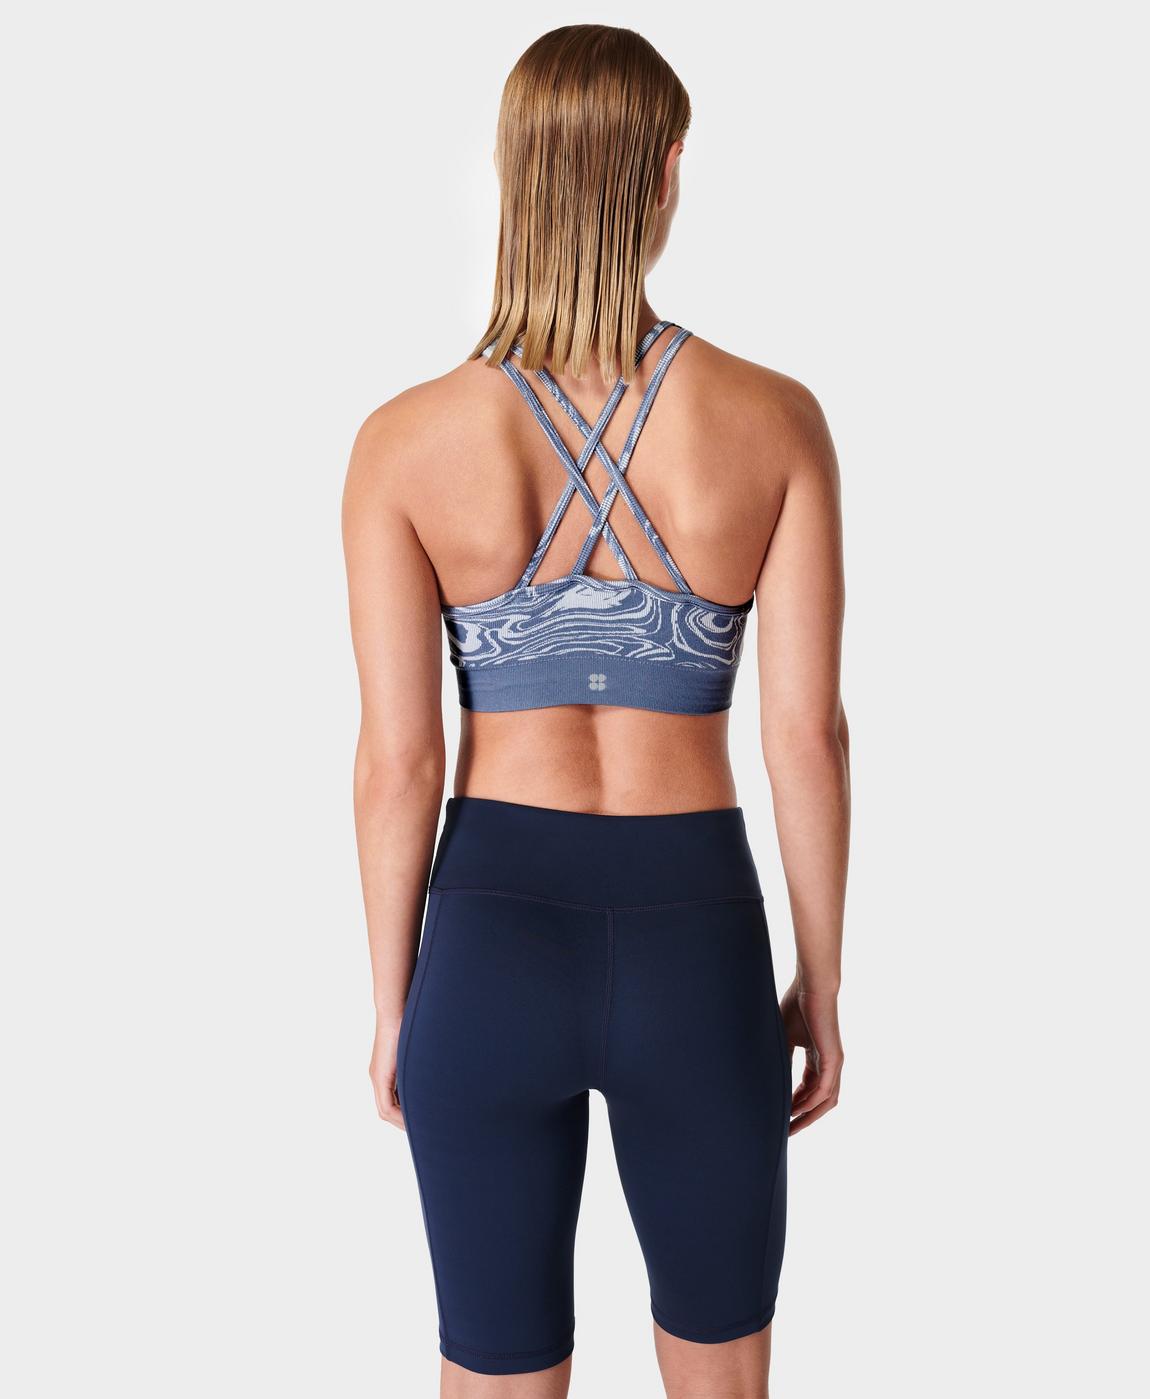 Mindful Seamless High Neck Yoga Bra - Endless Blue Liquid Jacquard, Women's Sports Bras